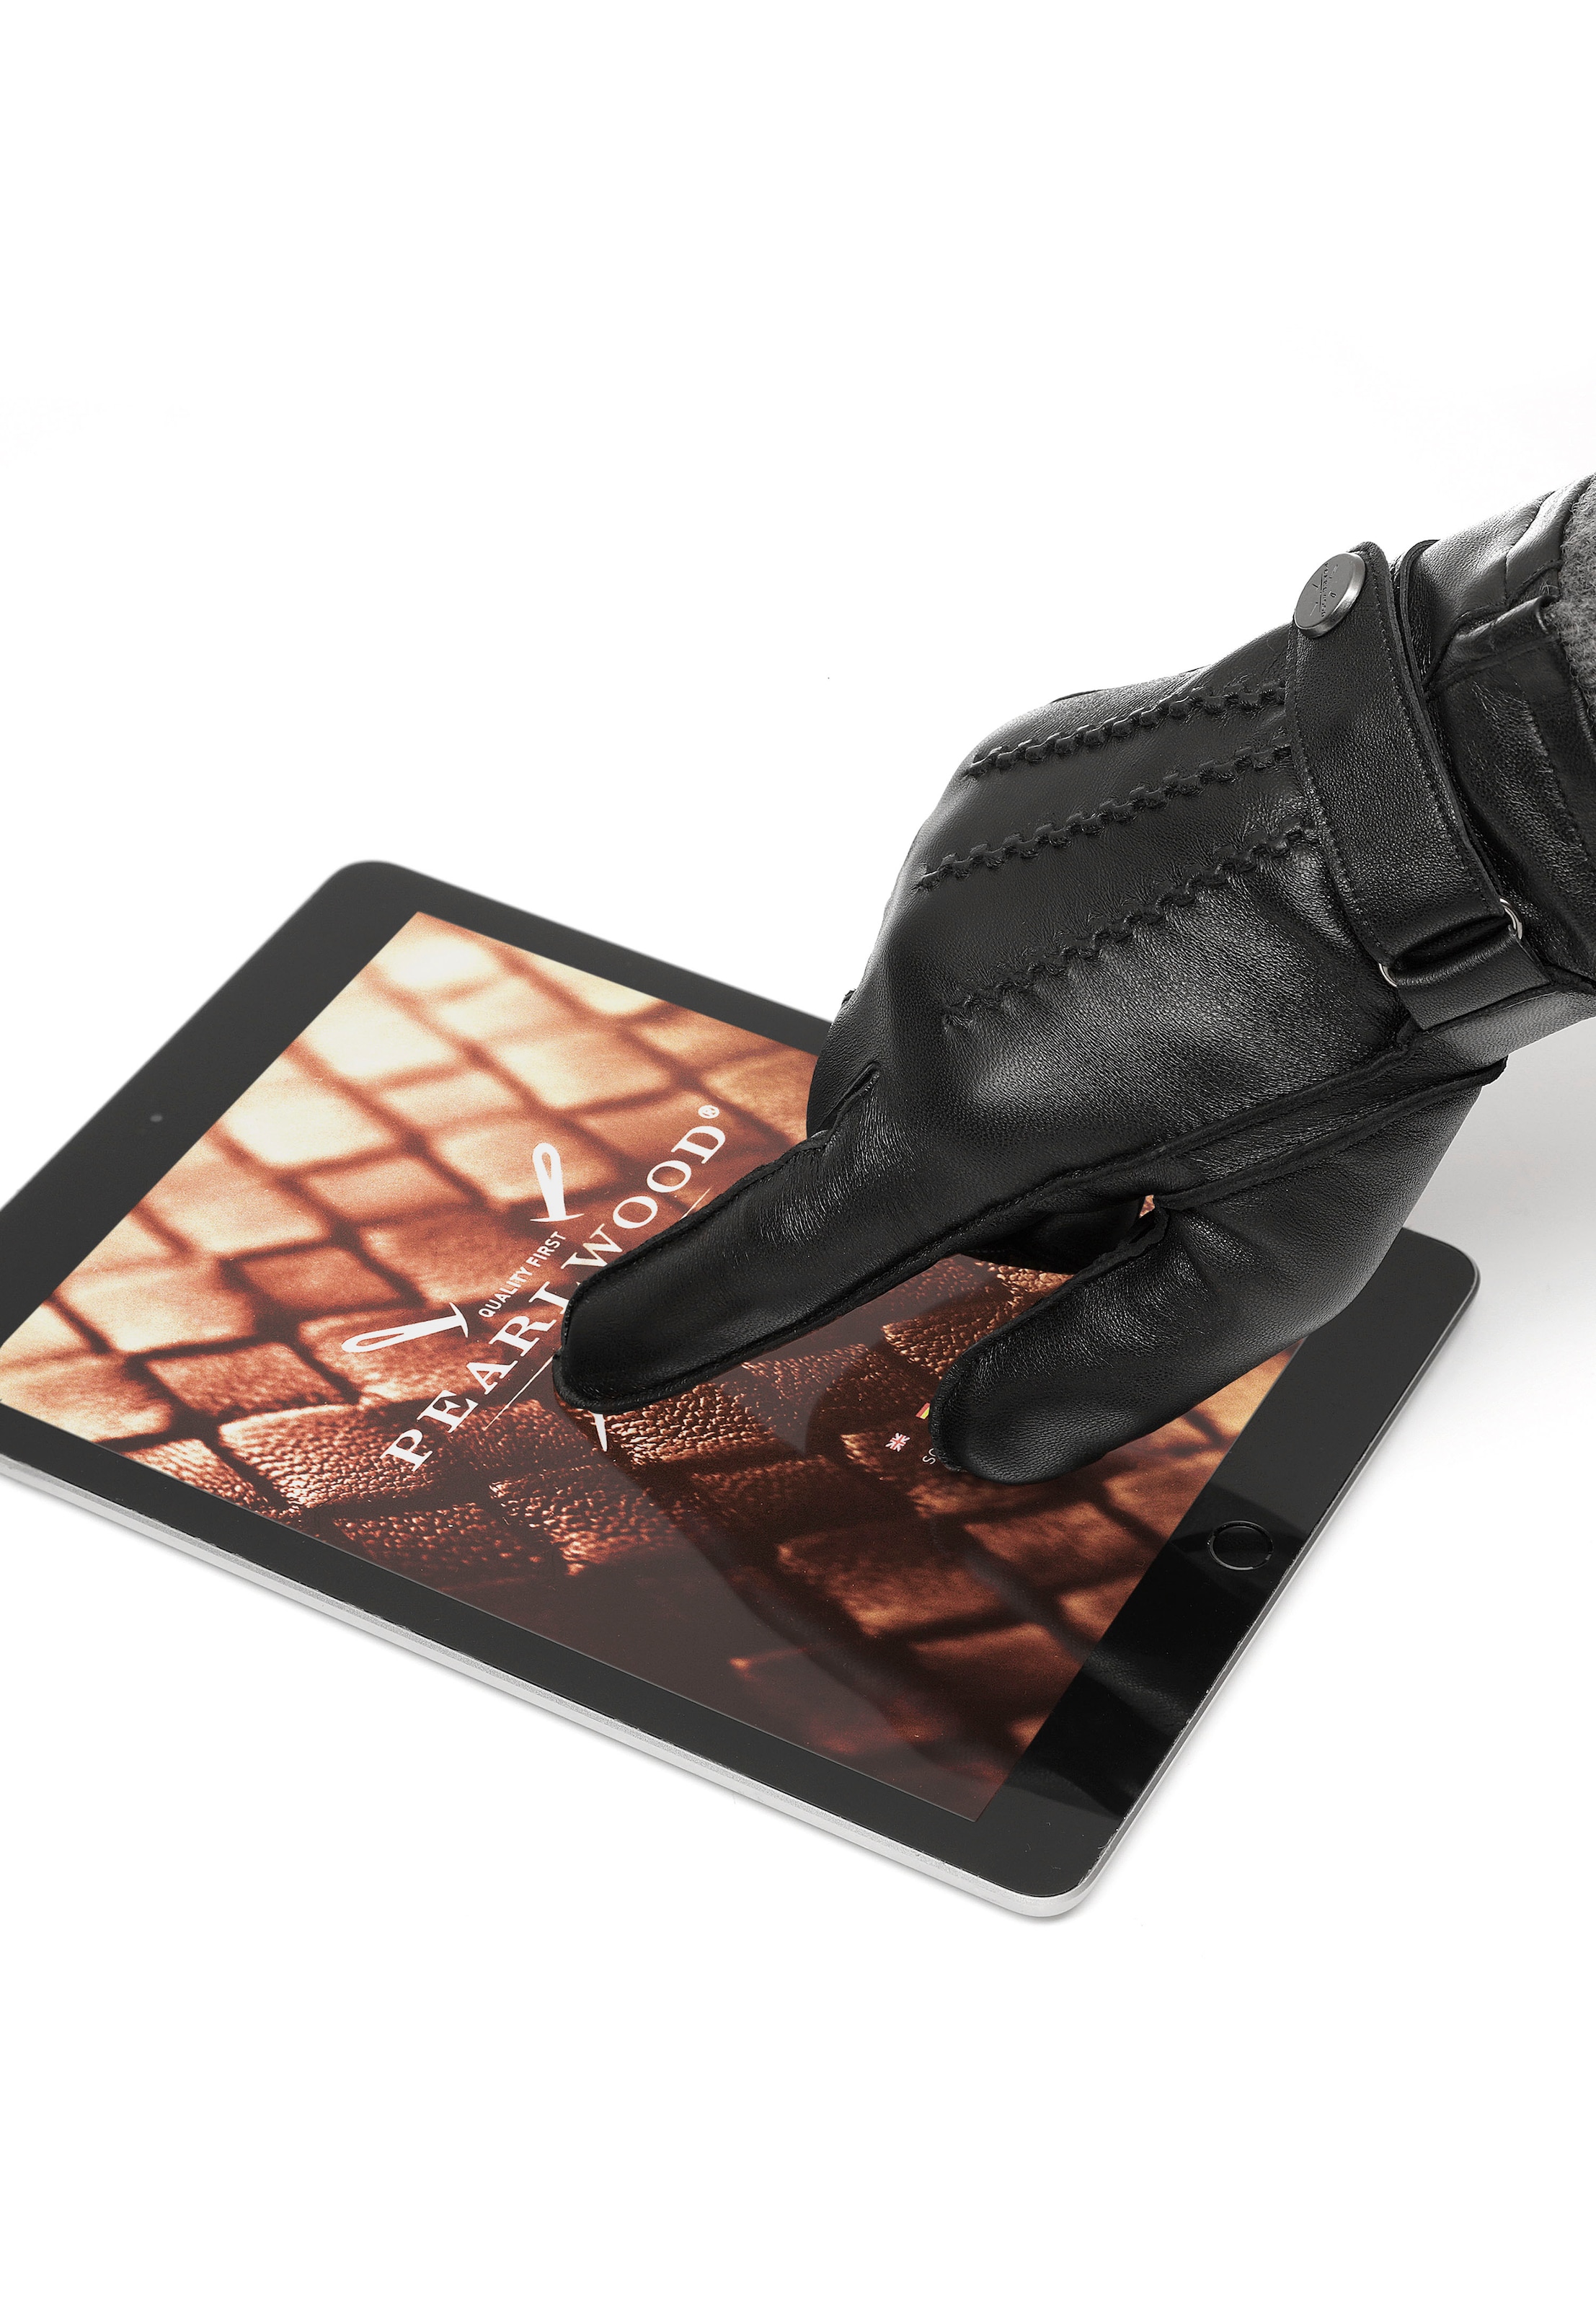 kaufen »Mike«, Finger | PEARLWOOD System Lederhandschuhe BAUR für - Touchscreen proofed 10